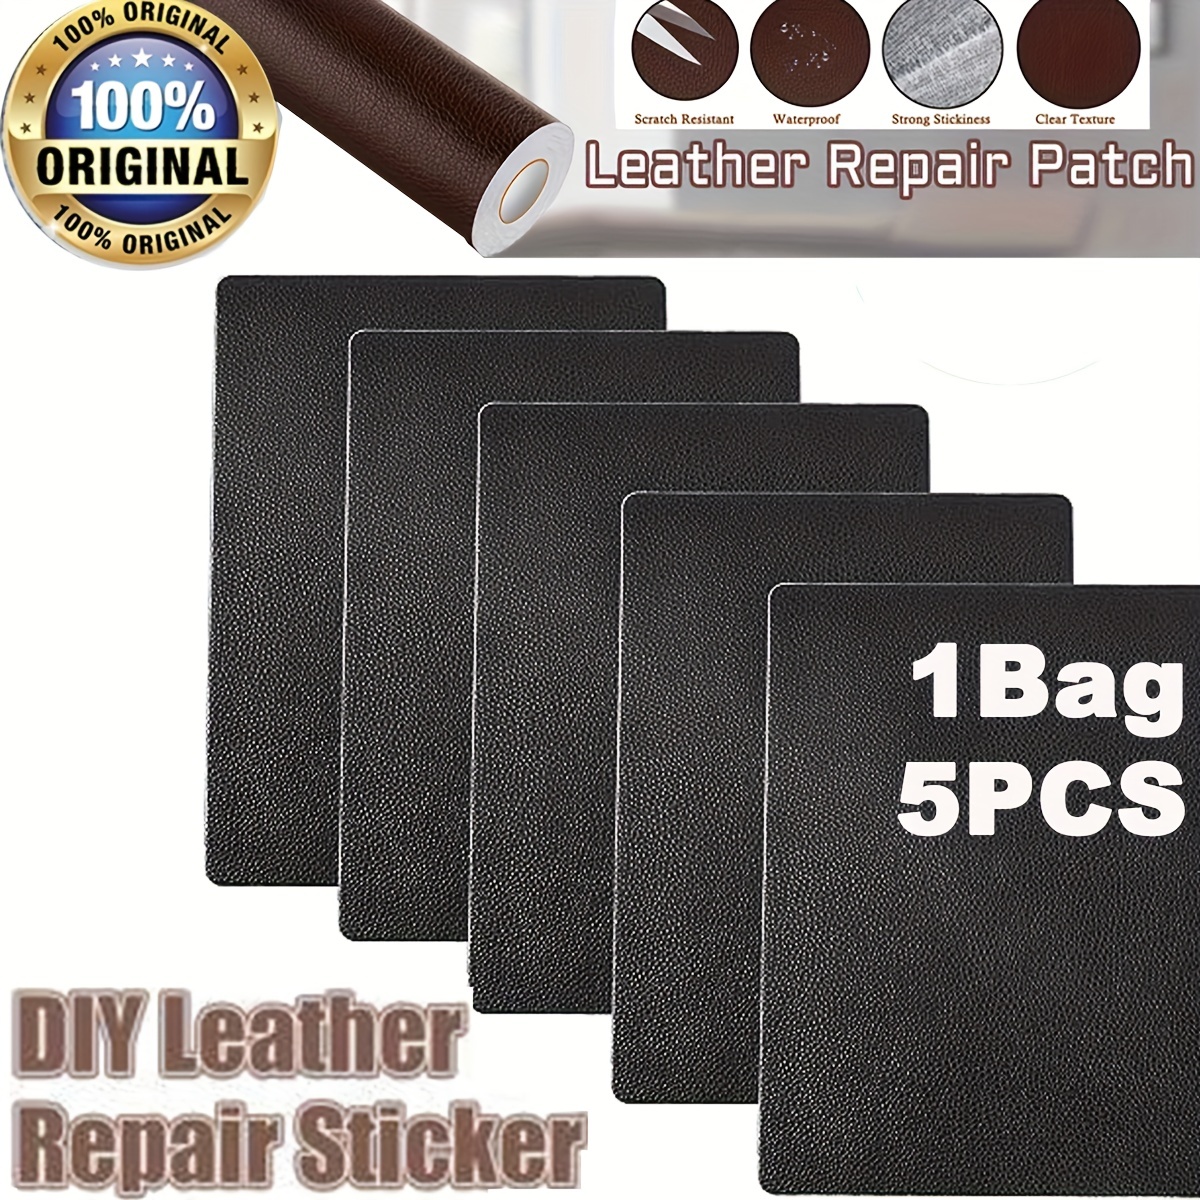 6 PCS Leather Repair Patch, Pleather Patch, Faux Leather Repair Kit